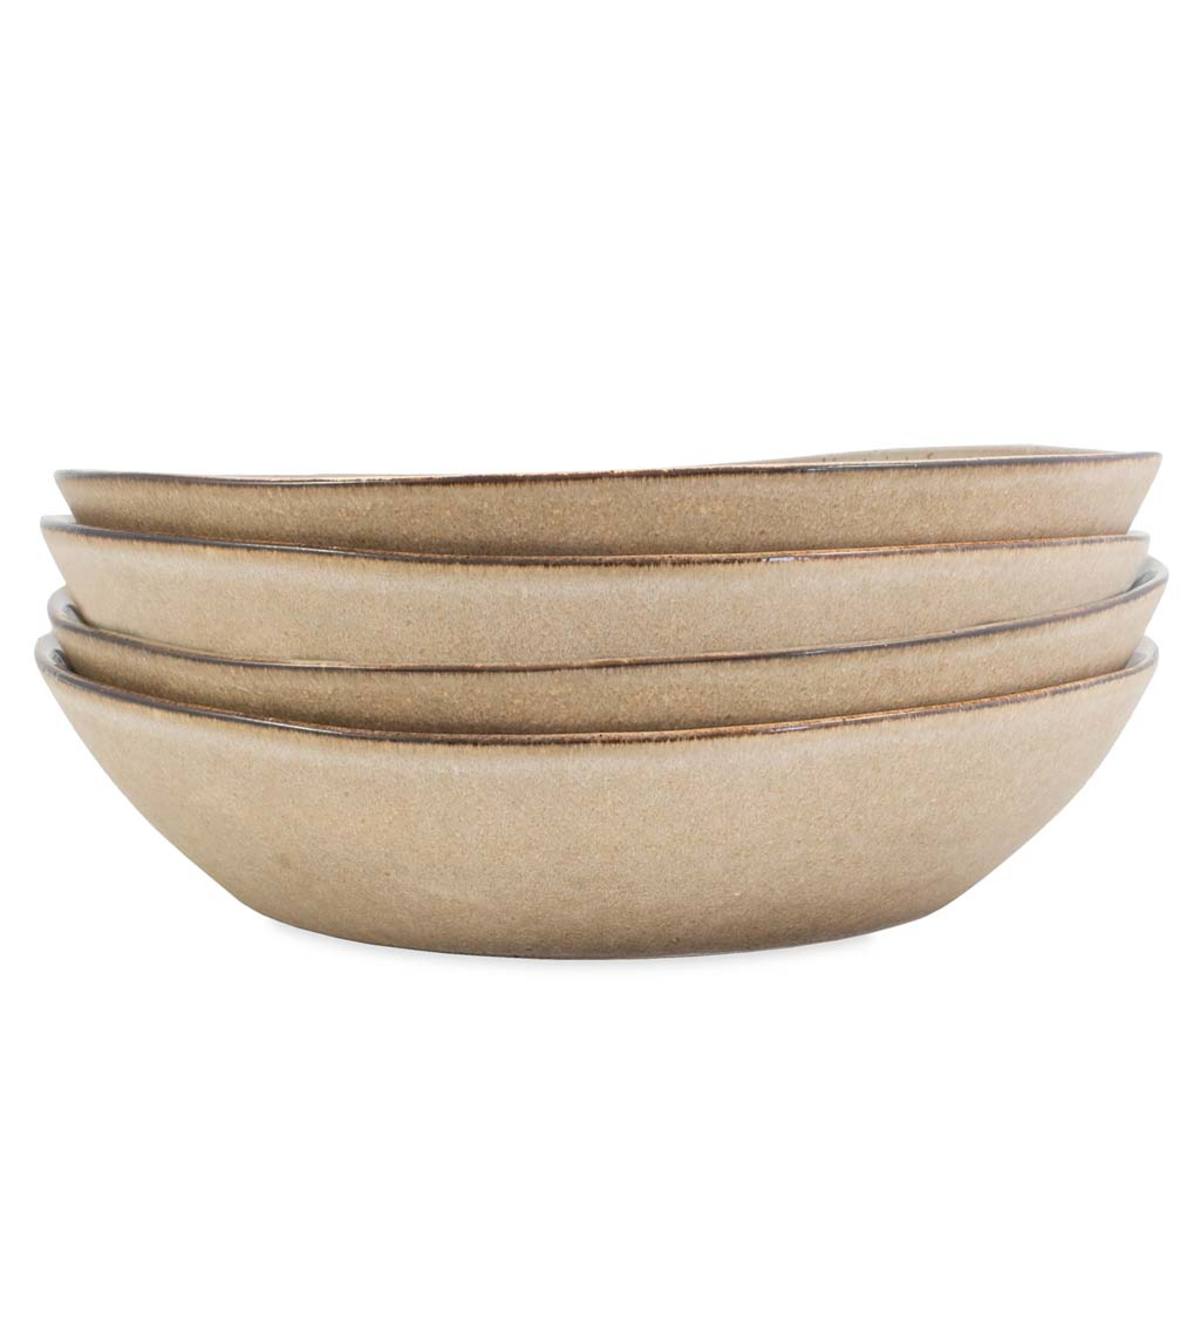 Farmstead Stoneware Pasta Bowls, Set of 4 - Mushroom